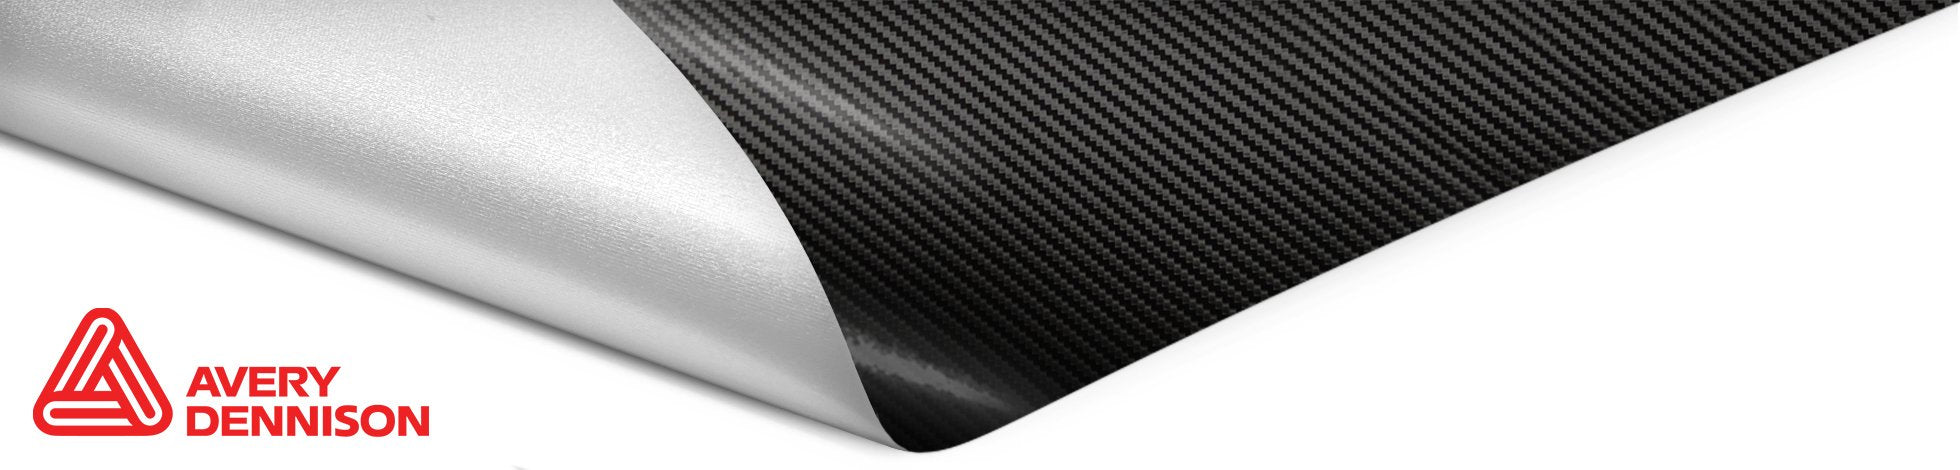 avery dennison carbon fiber vinyl wrap